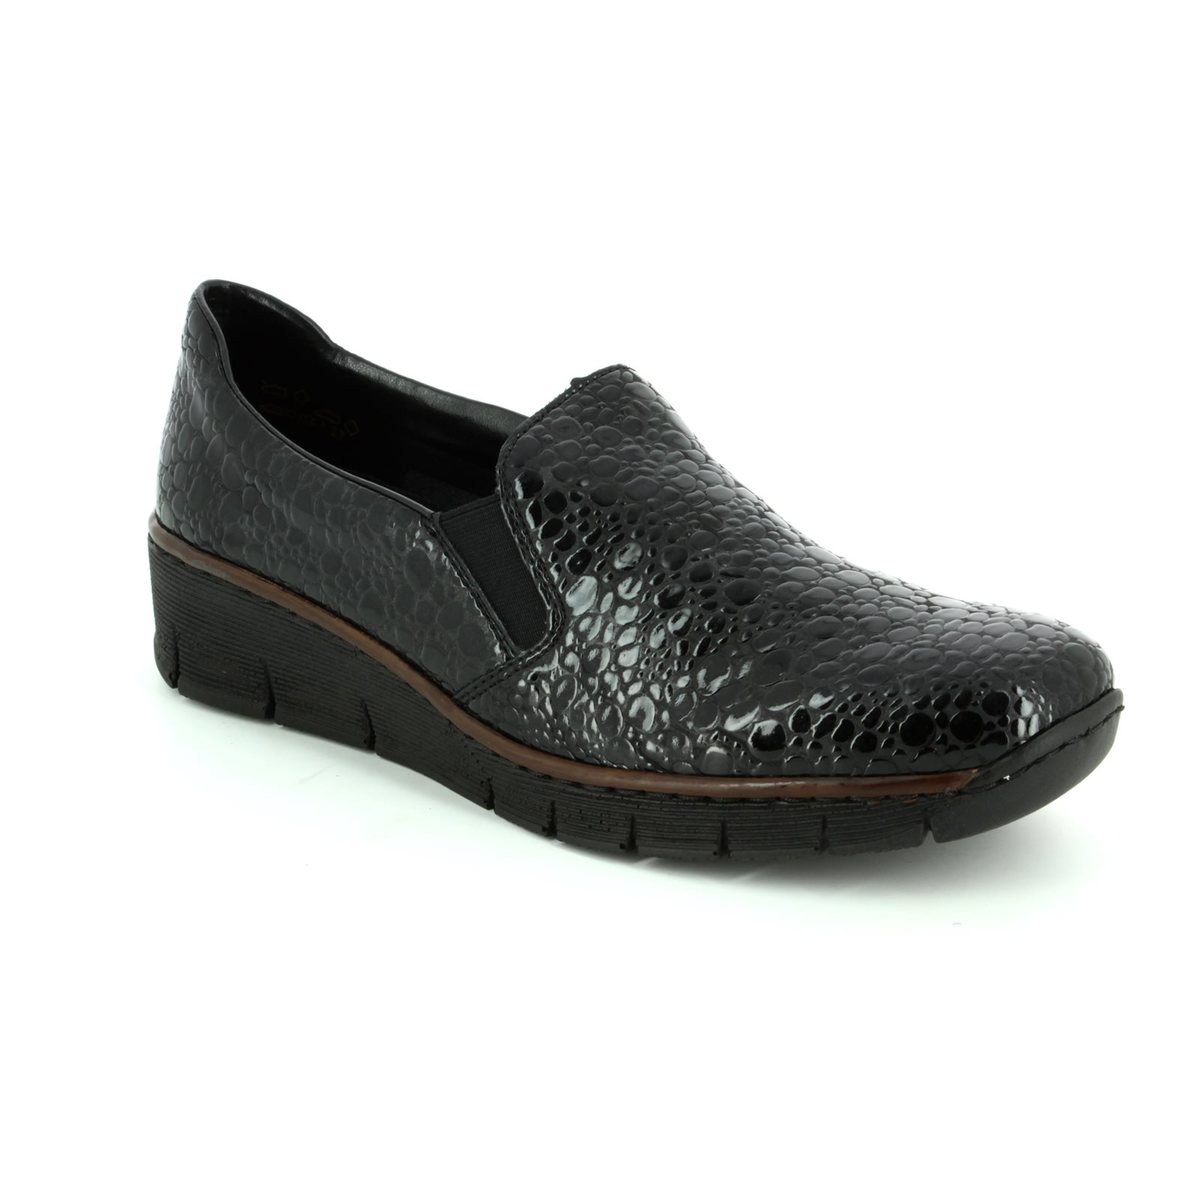 Rieker Bocciago Black Croc Womens Comfort Slip On Shoes 53766-45 In Size 36 In Plain Black Croc Effect